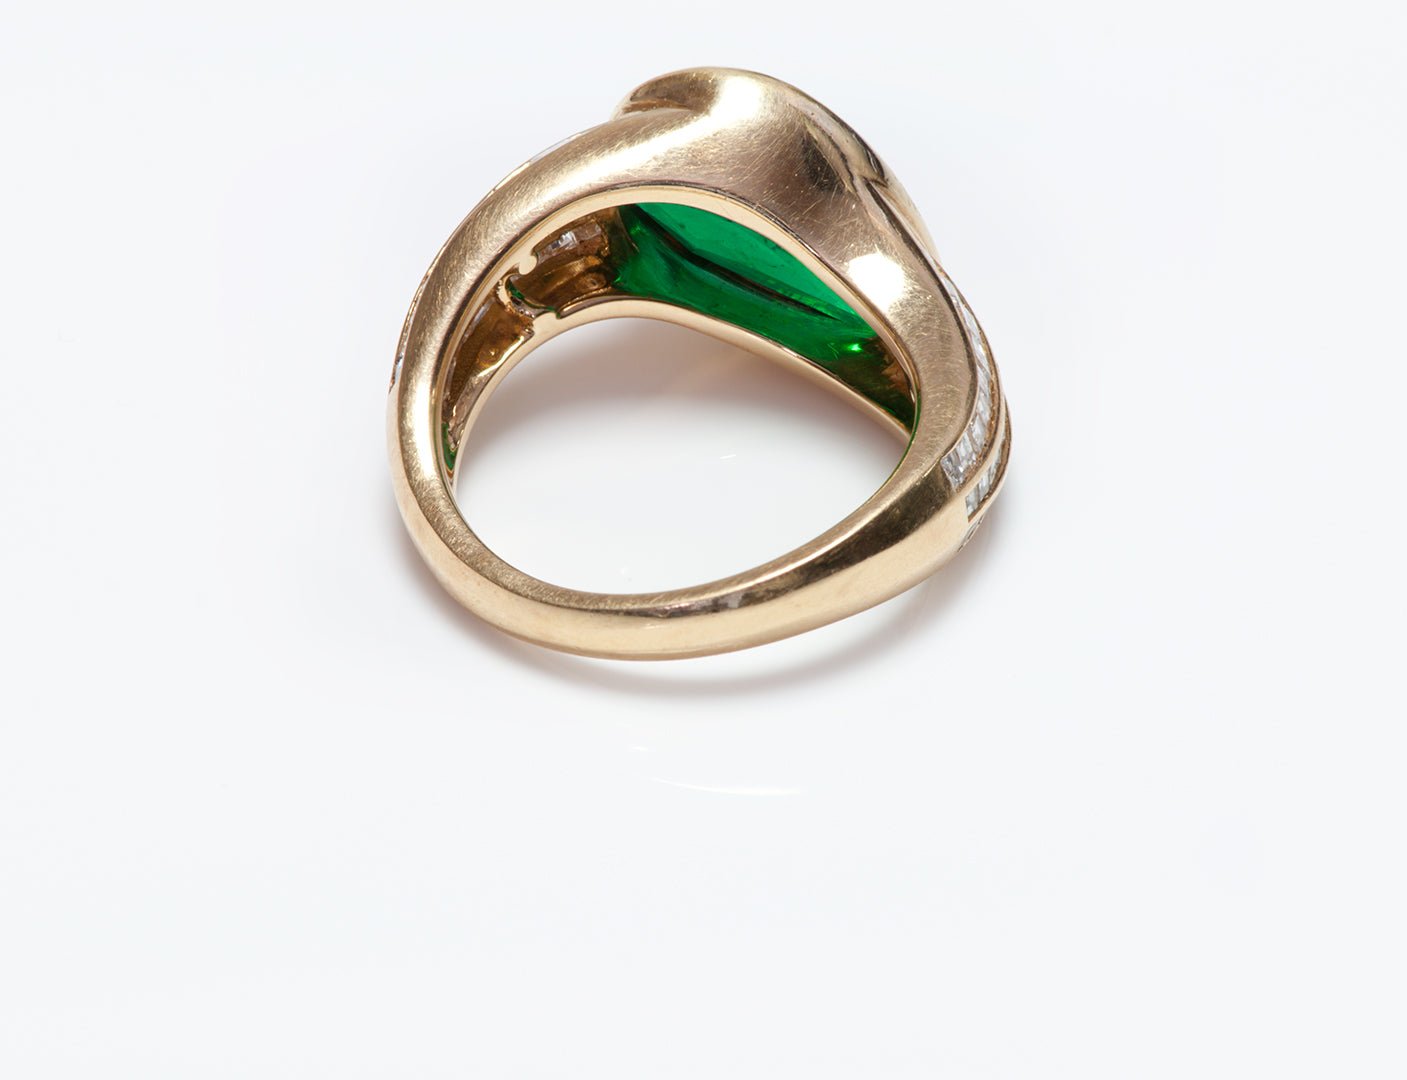 Vintage Pear Shaped Emerald Diamond 18K Yellow Gold Ring